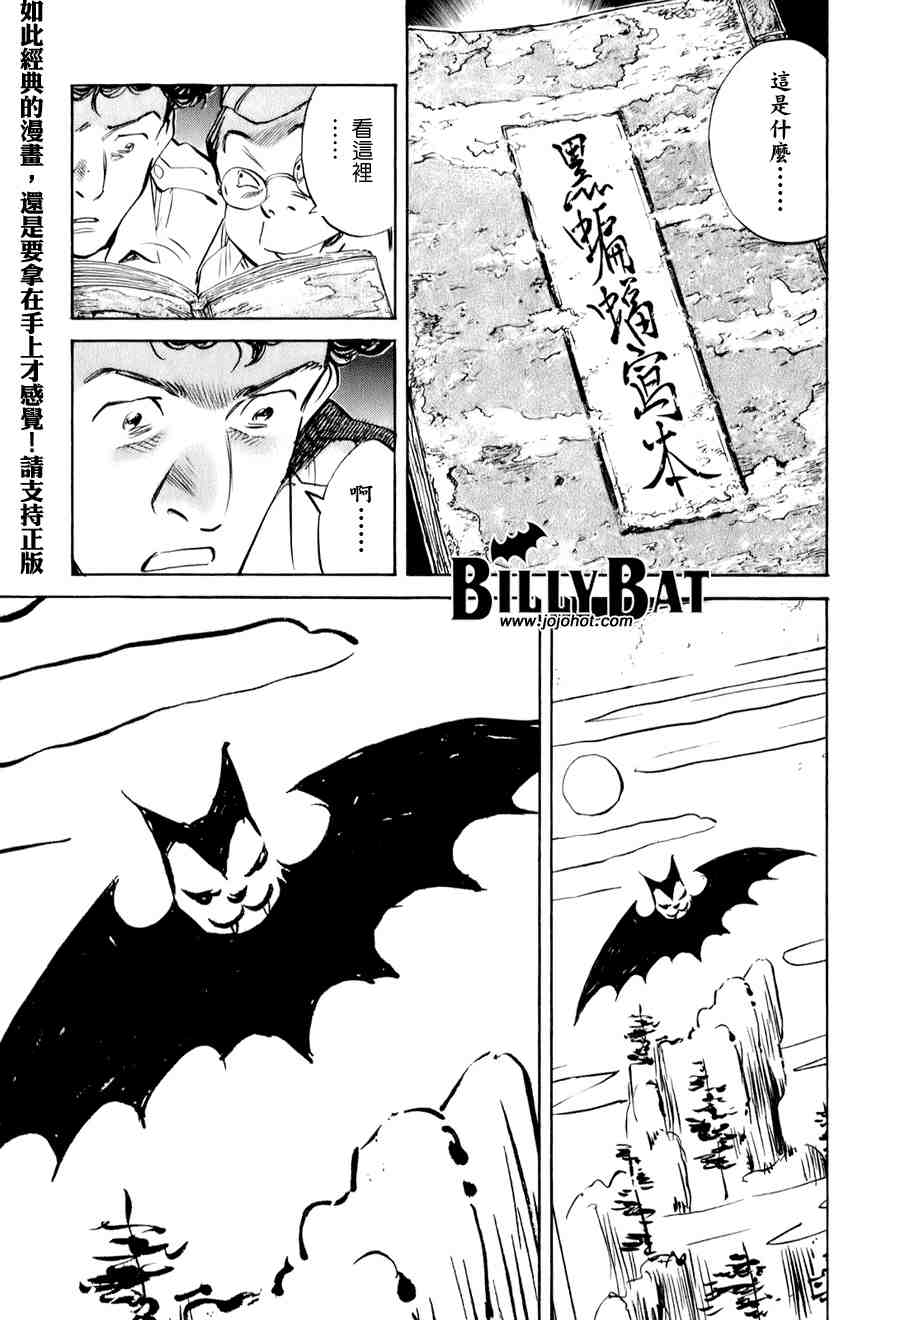 Billy_Bat - 第1卷(2/4) - 1